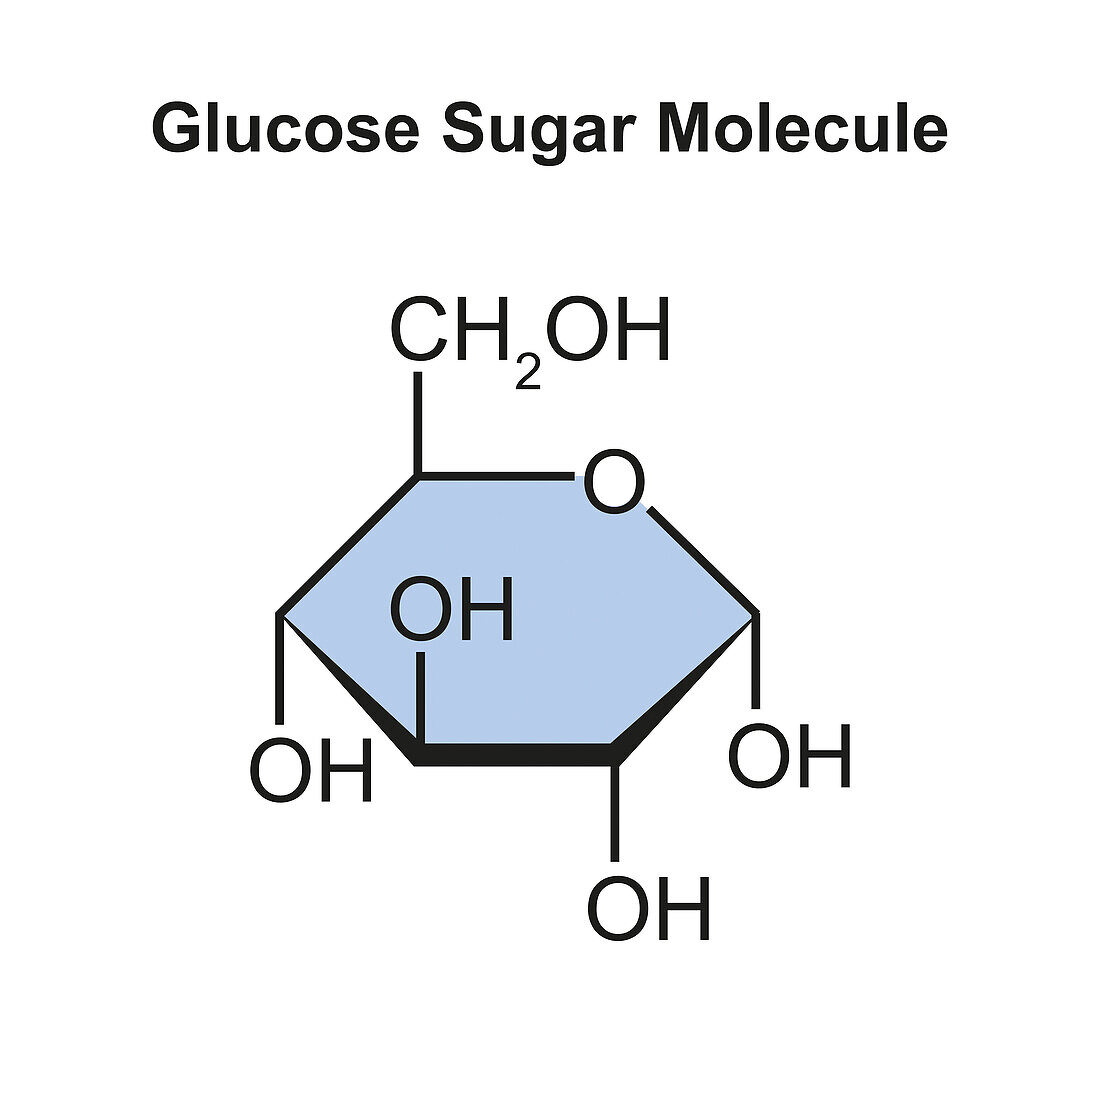 Glucose sugar molecule, illustration